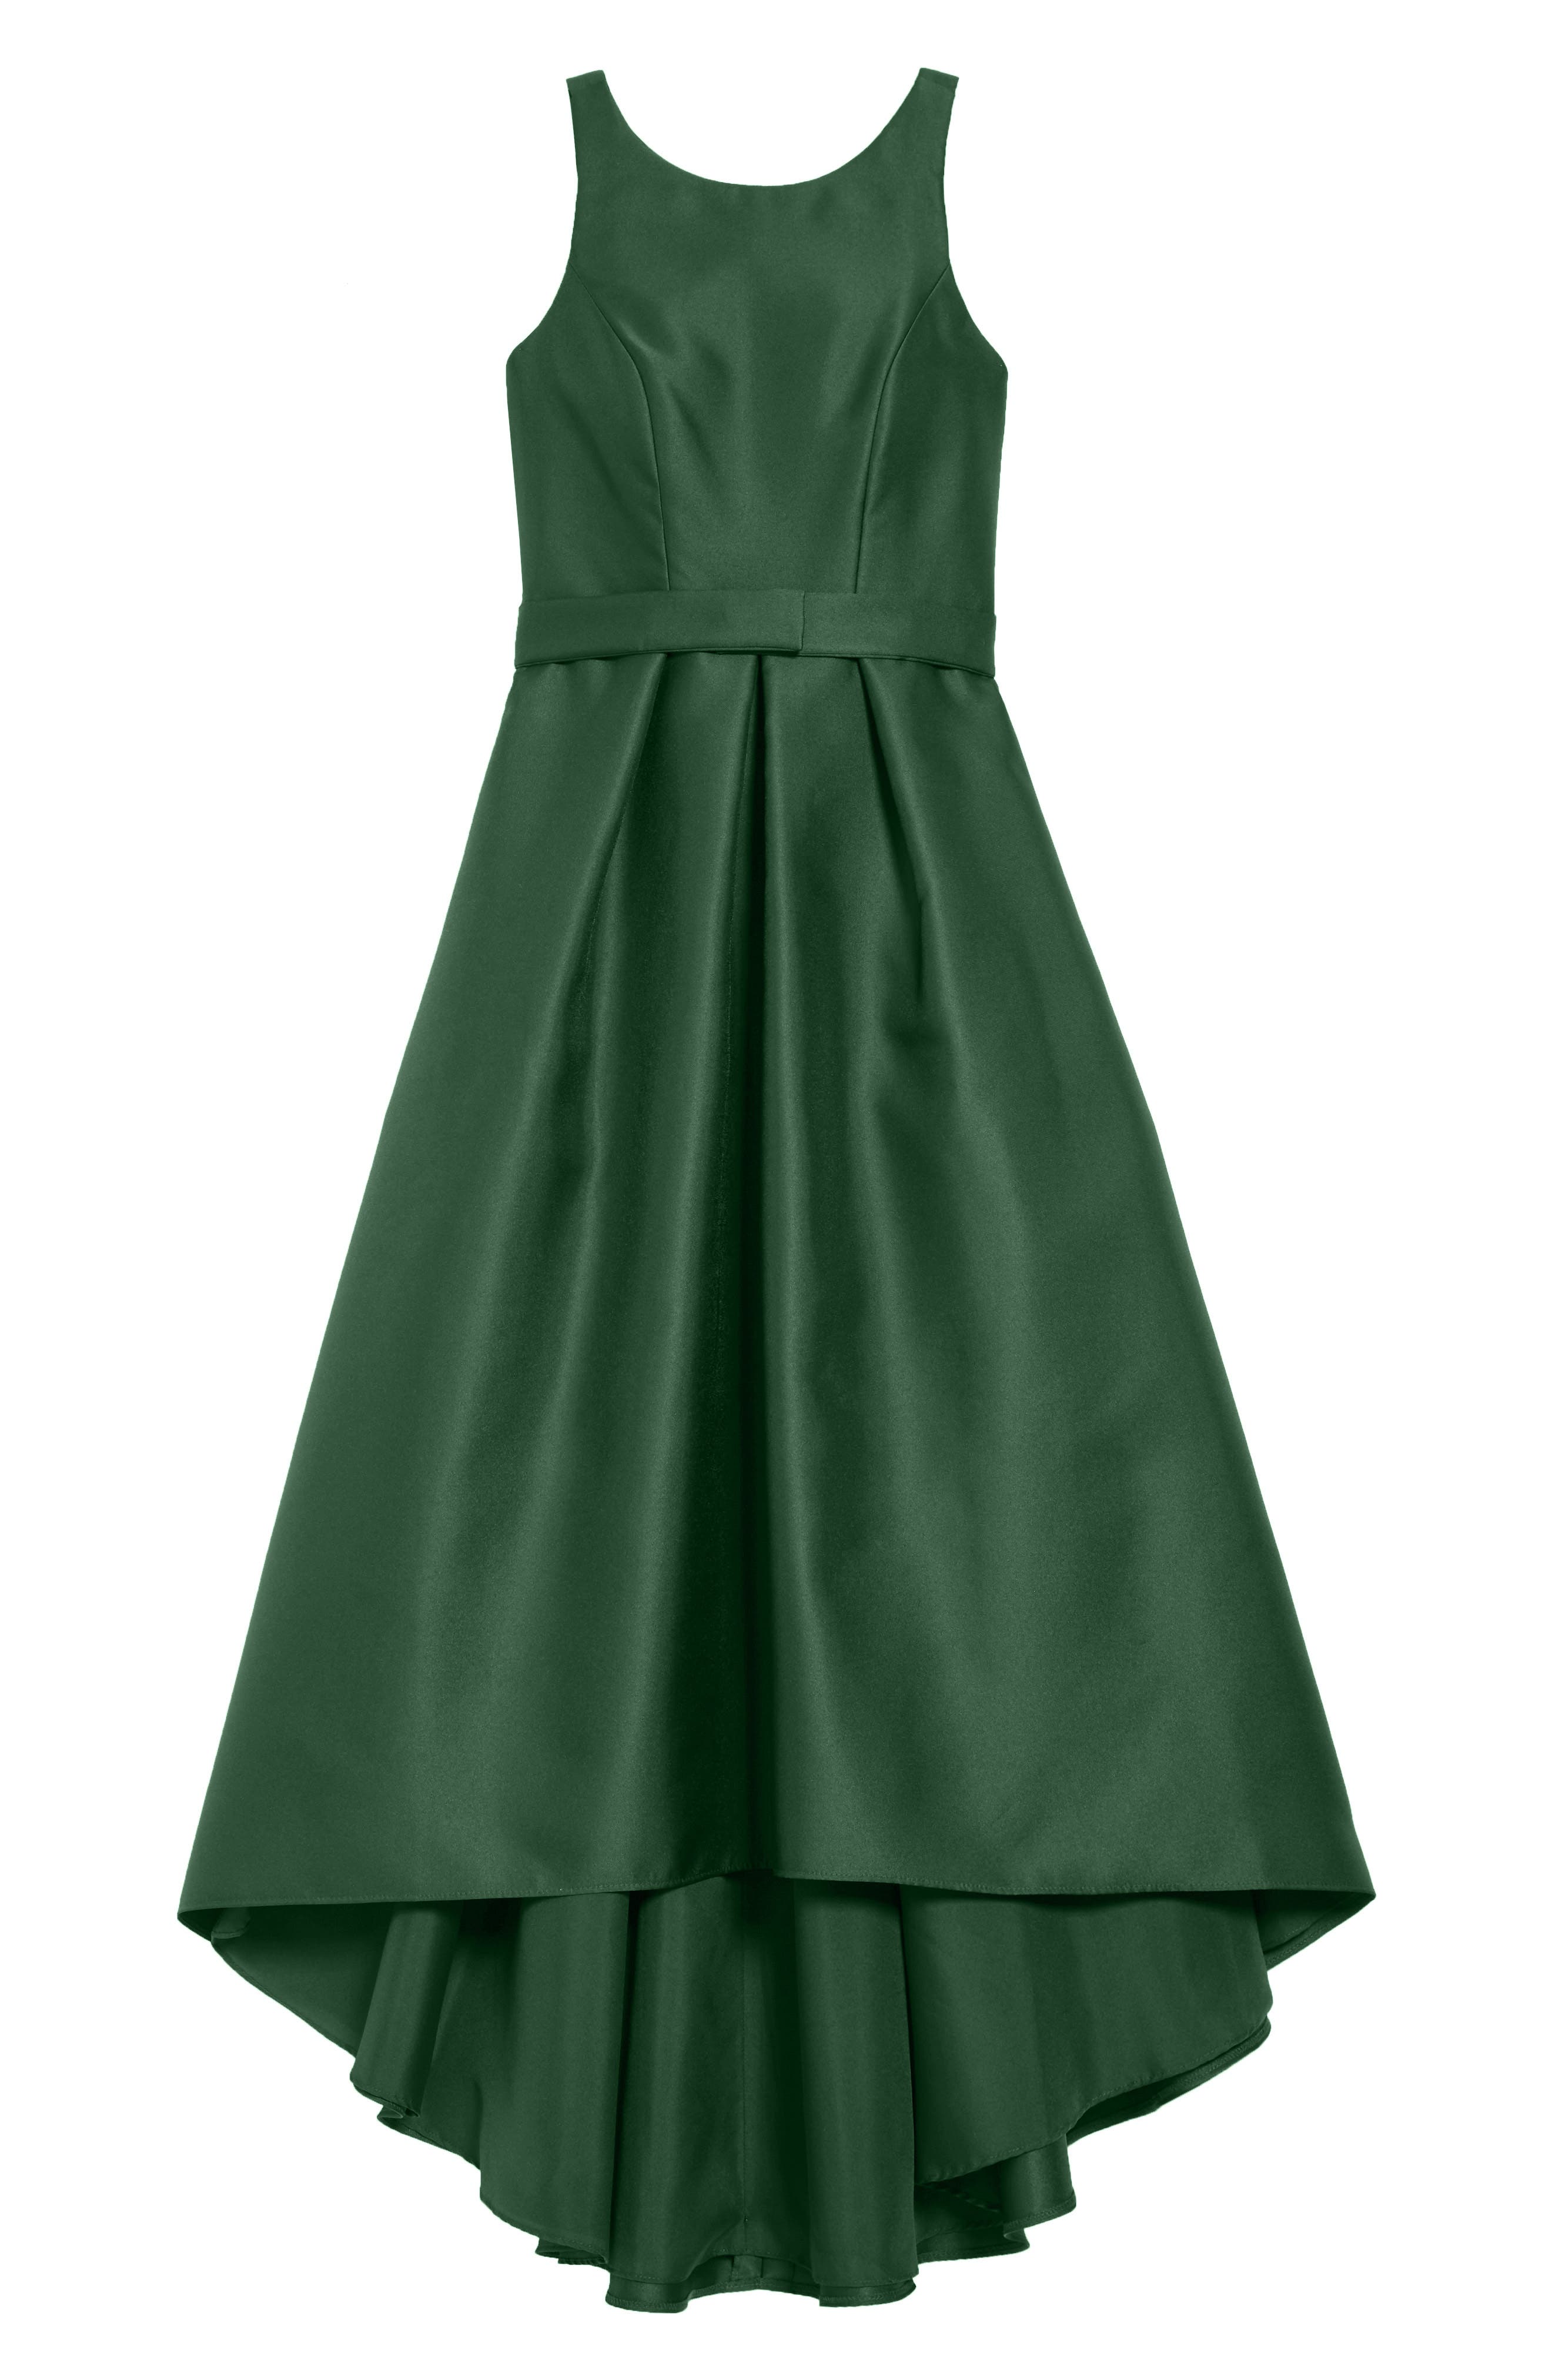 Girls' Green Dresses ☀ Rompers | Nordstrom